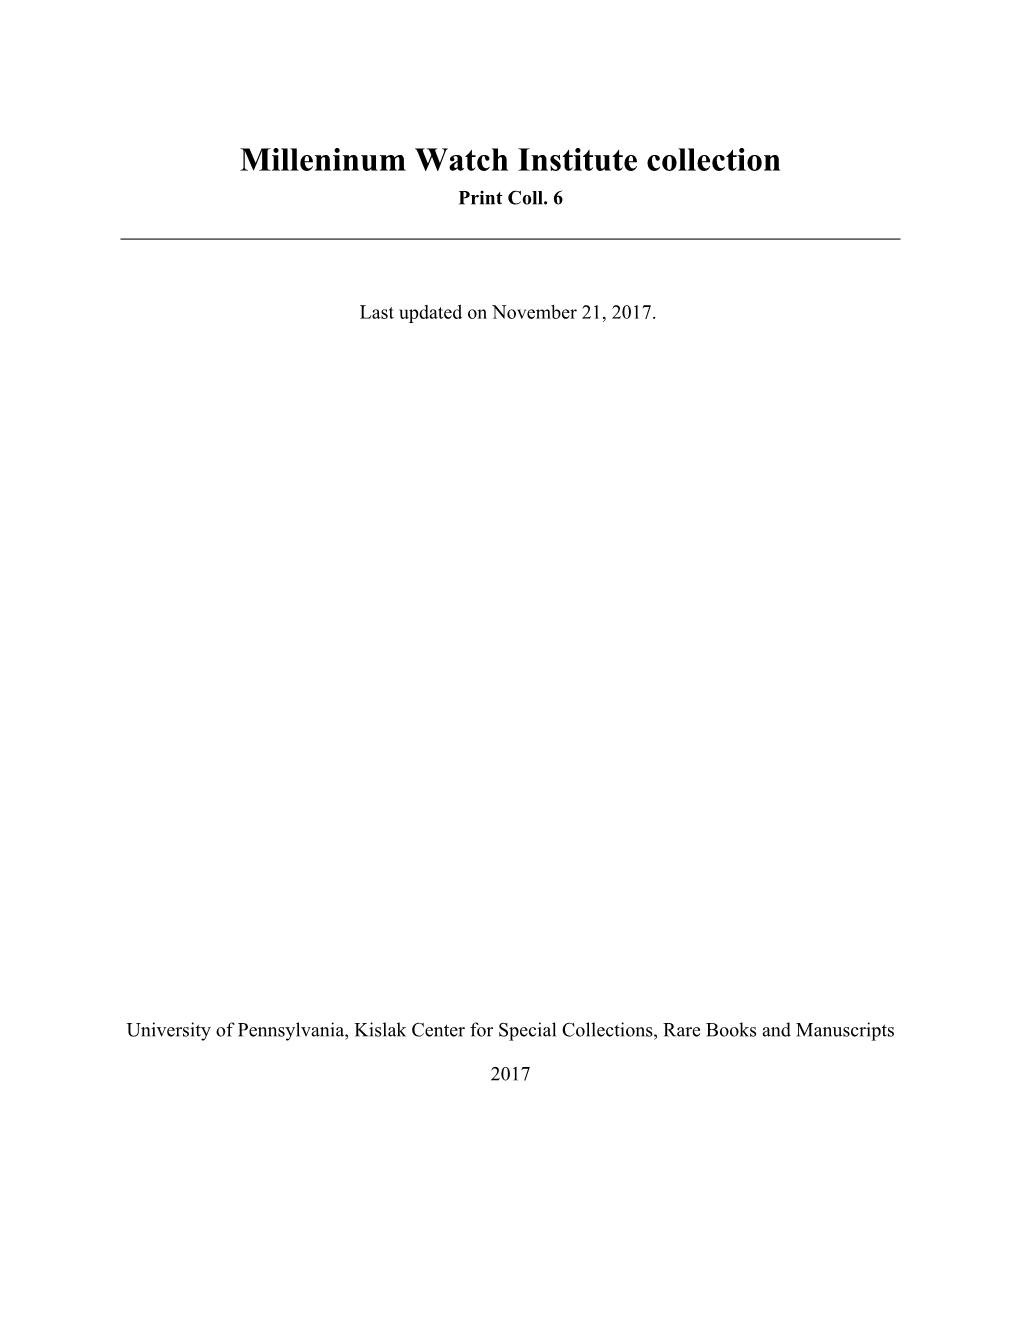 Milleninum Watch Institute Collection Print Coll